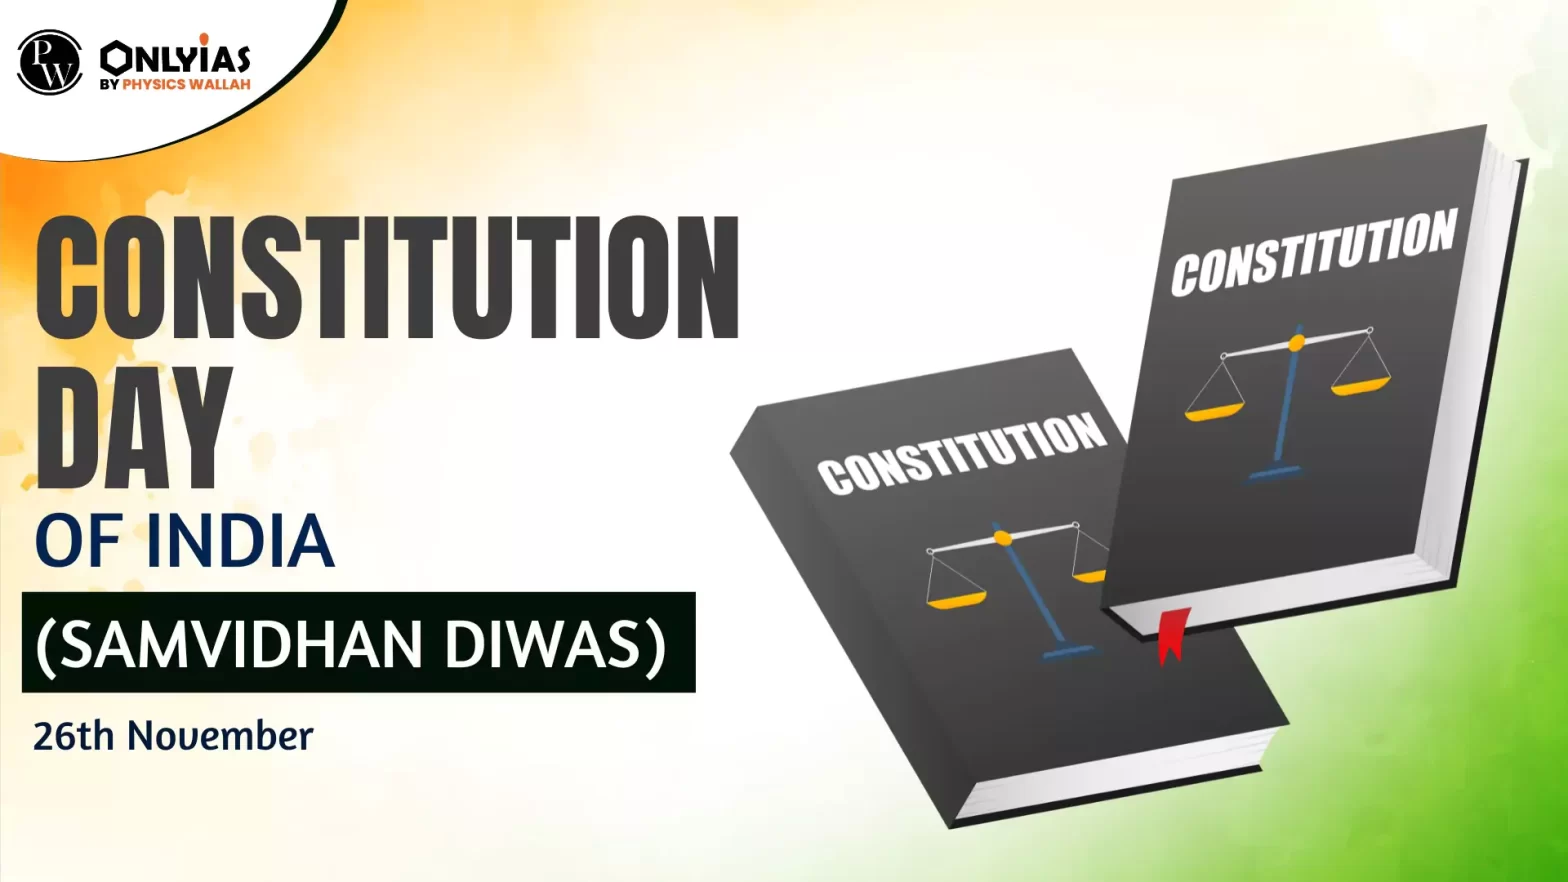 Constitution Day of India (Samvidhan Diwas) – 26th November